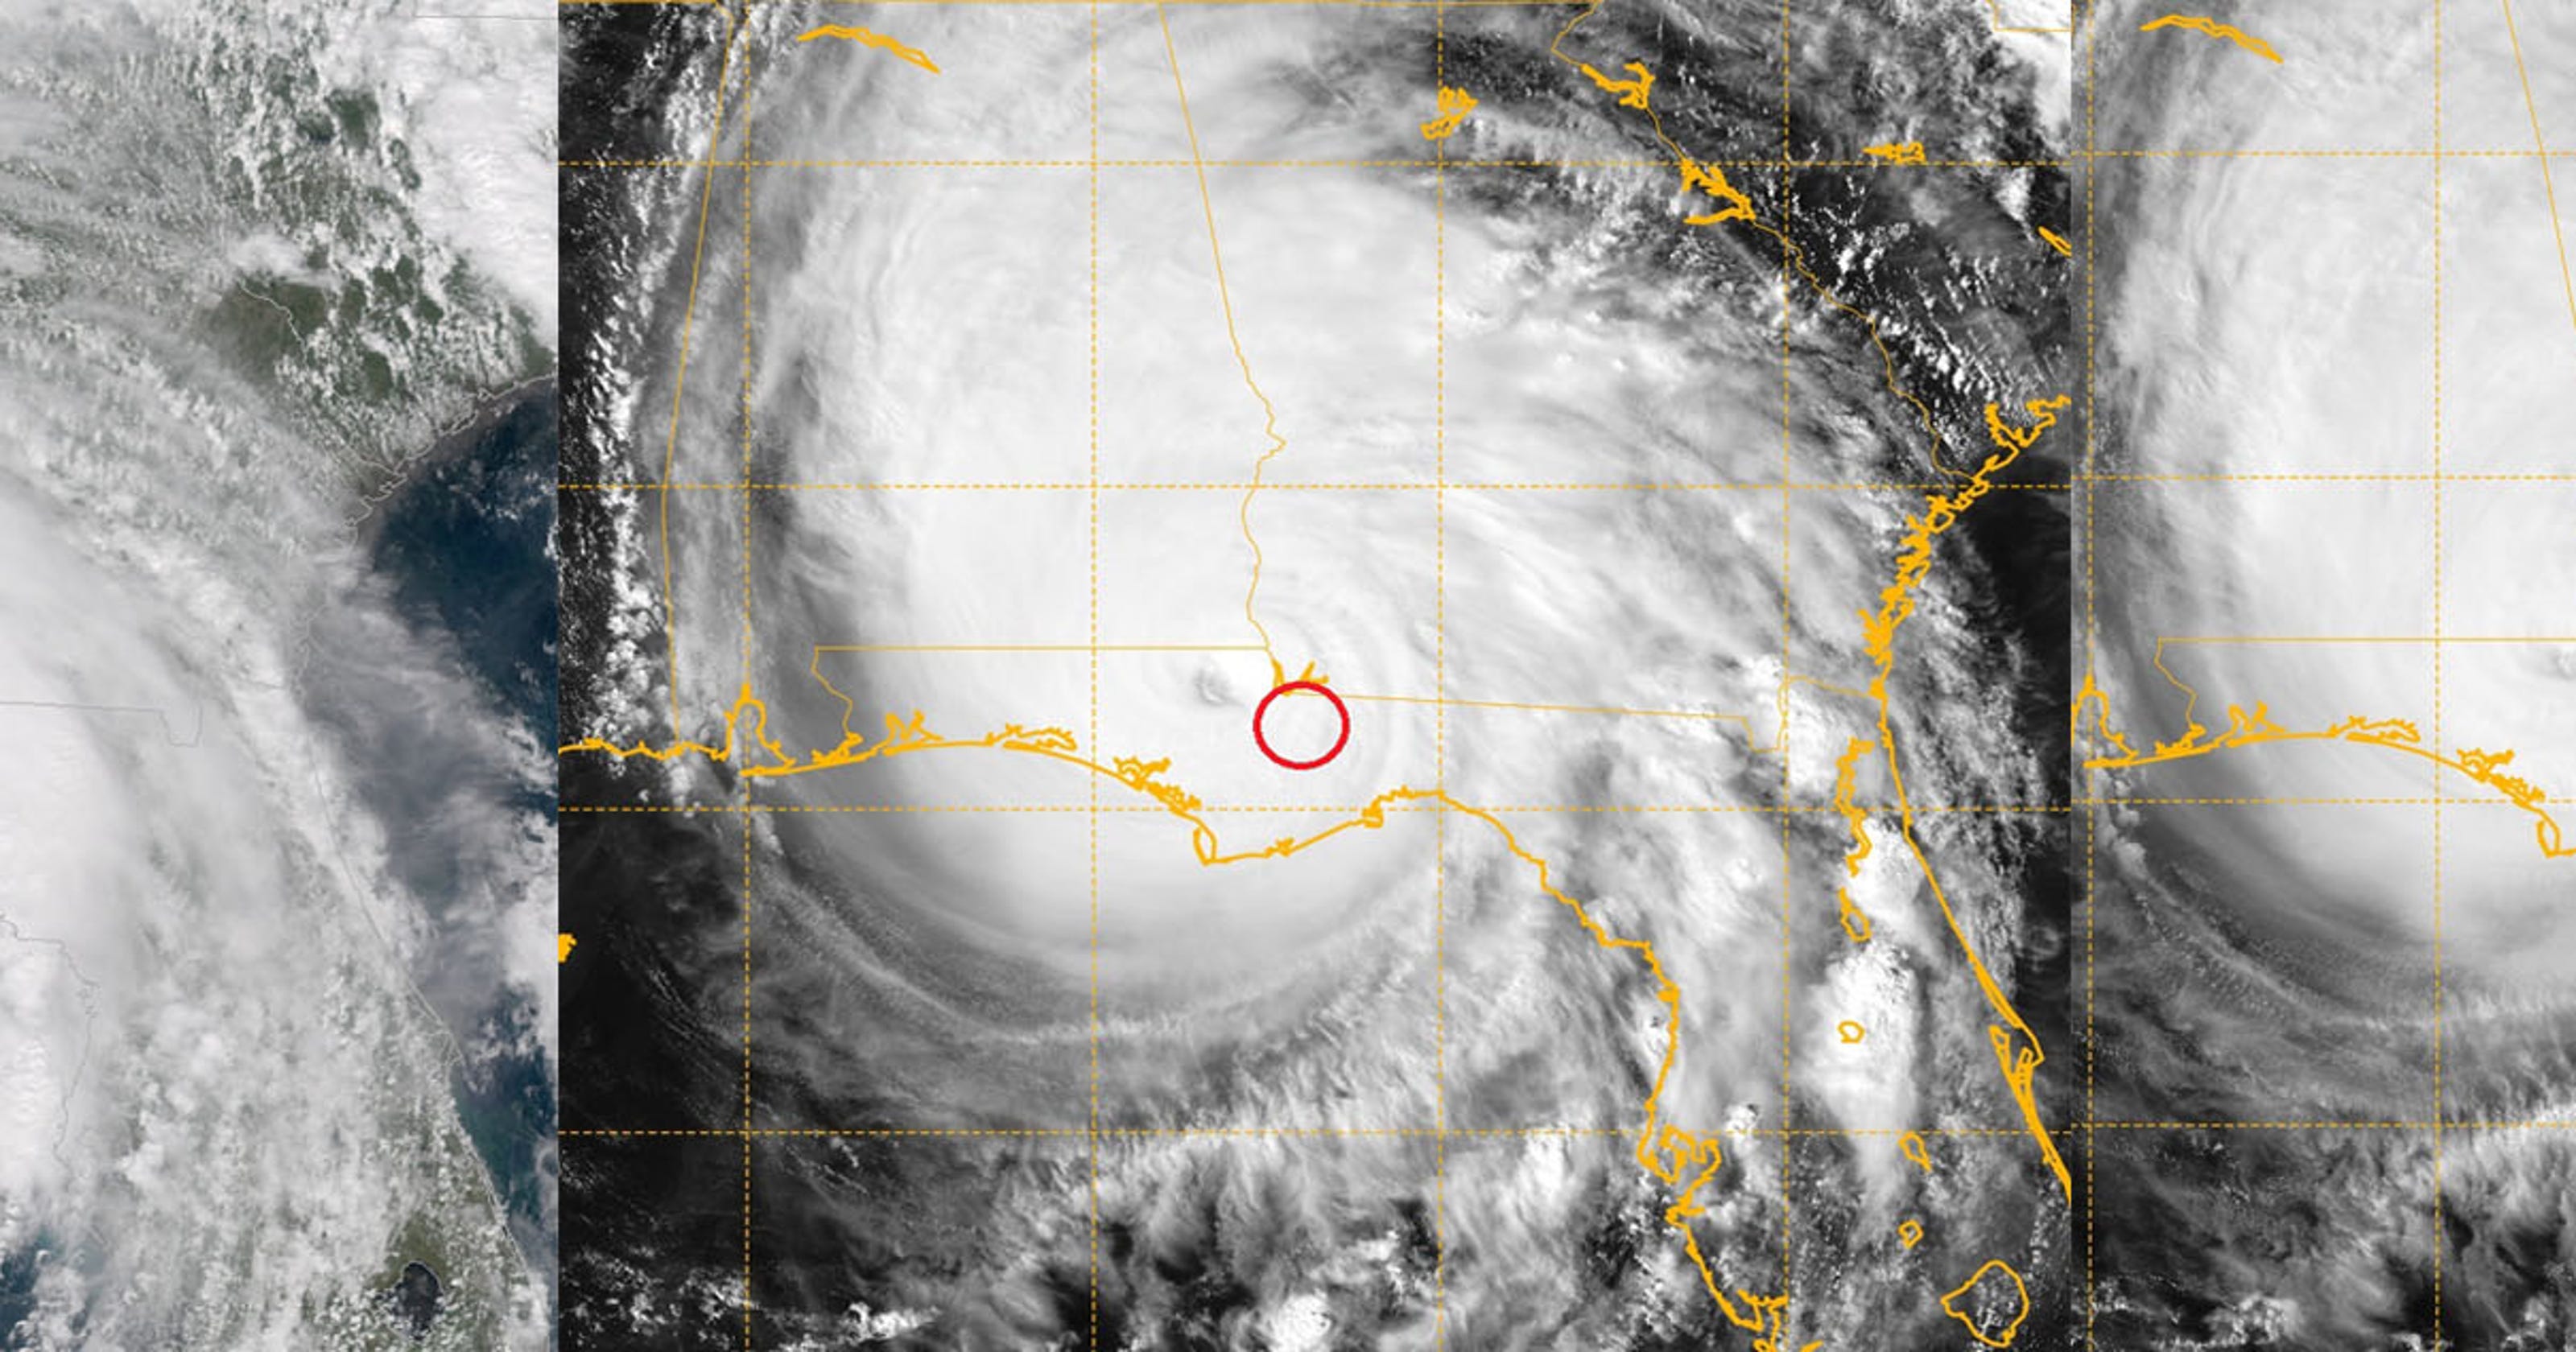 What if Hurricane Michael had hit Tallahassee?